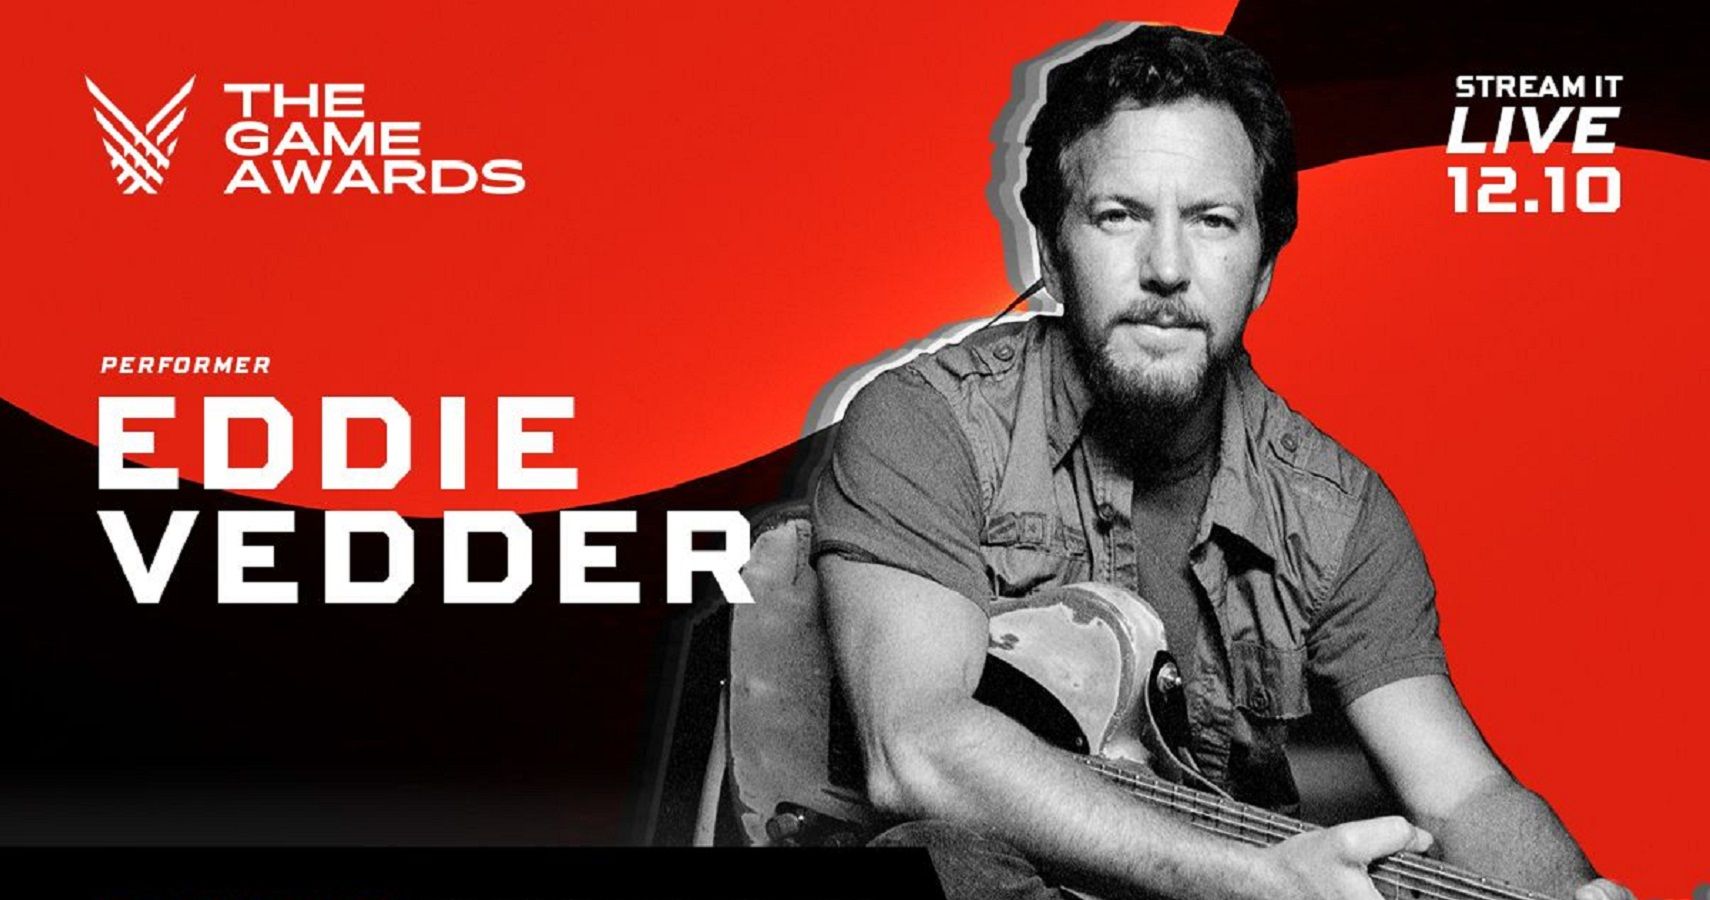 Pearl Jams Eddie Vedder Will Be Performing At The Game Awards